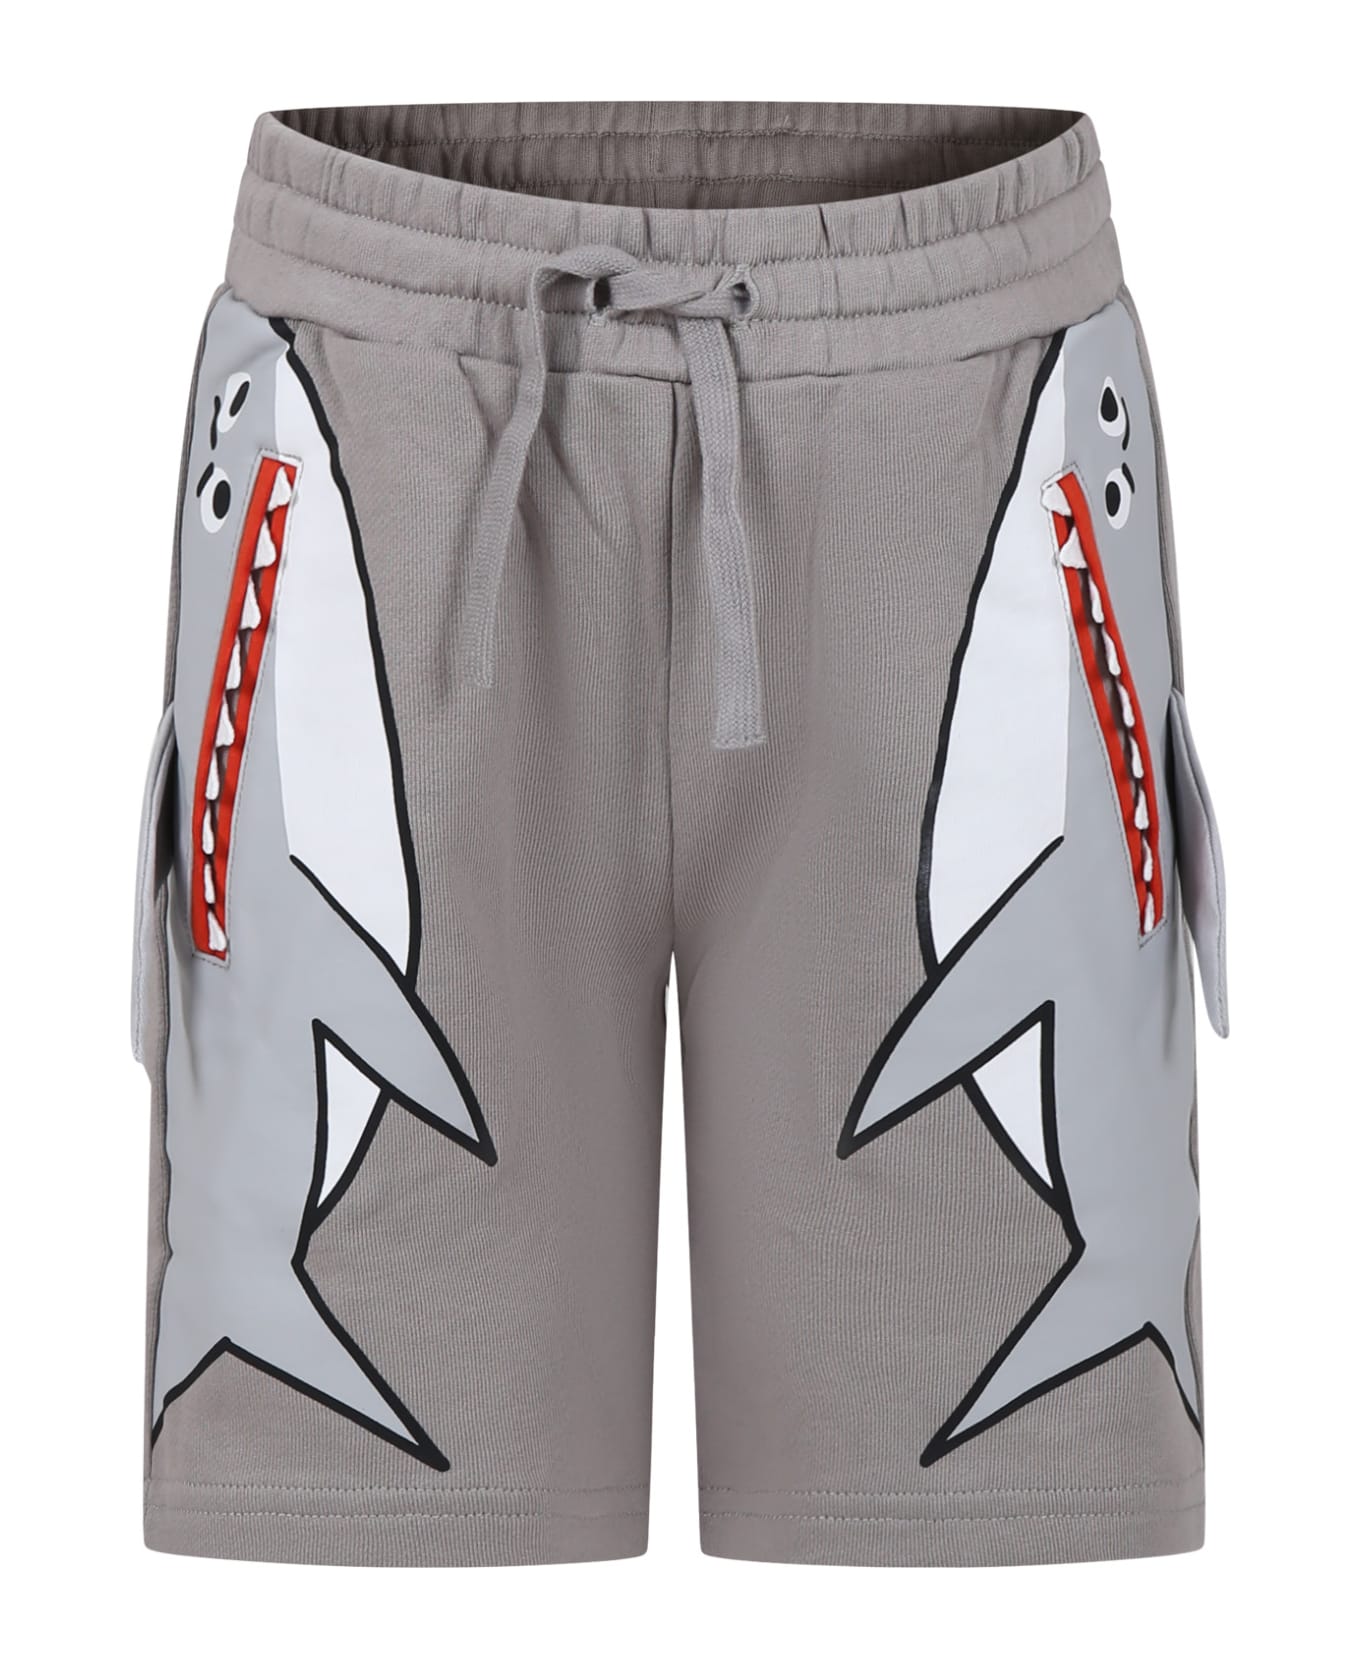 Stella McCartney Kids Gray Shorts For Boy With Sharks - Grey